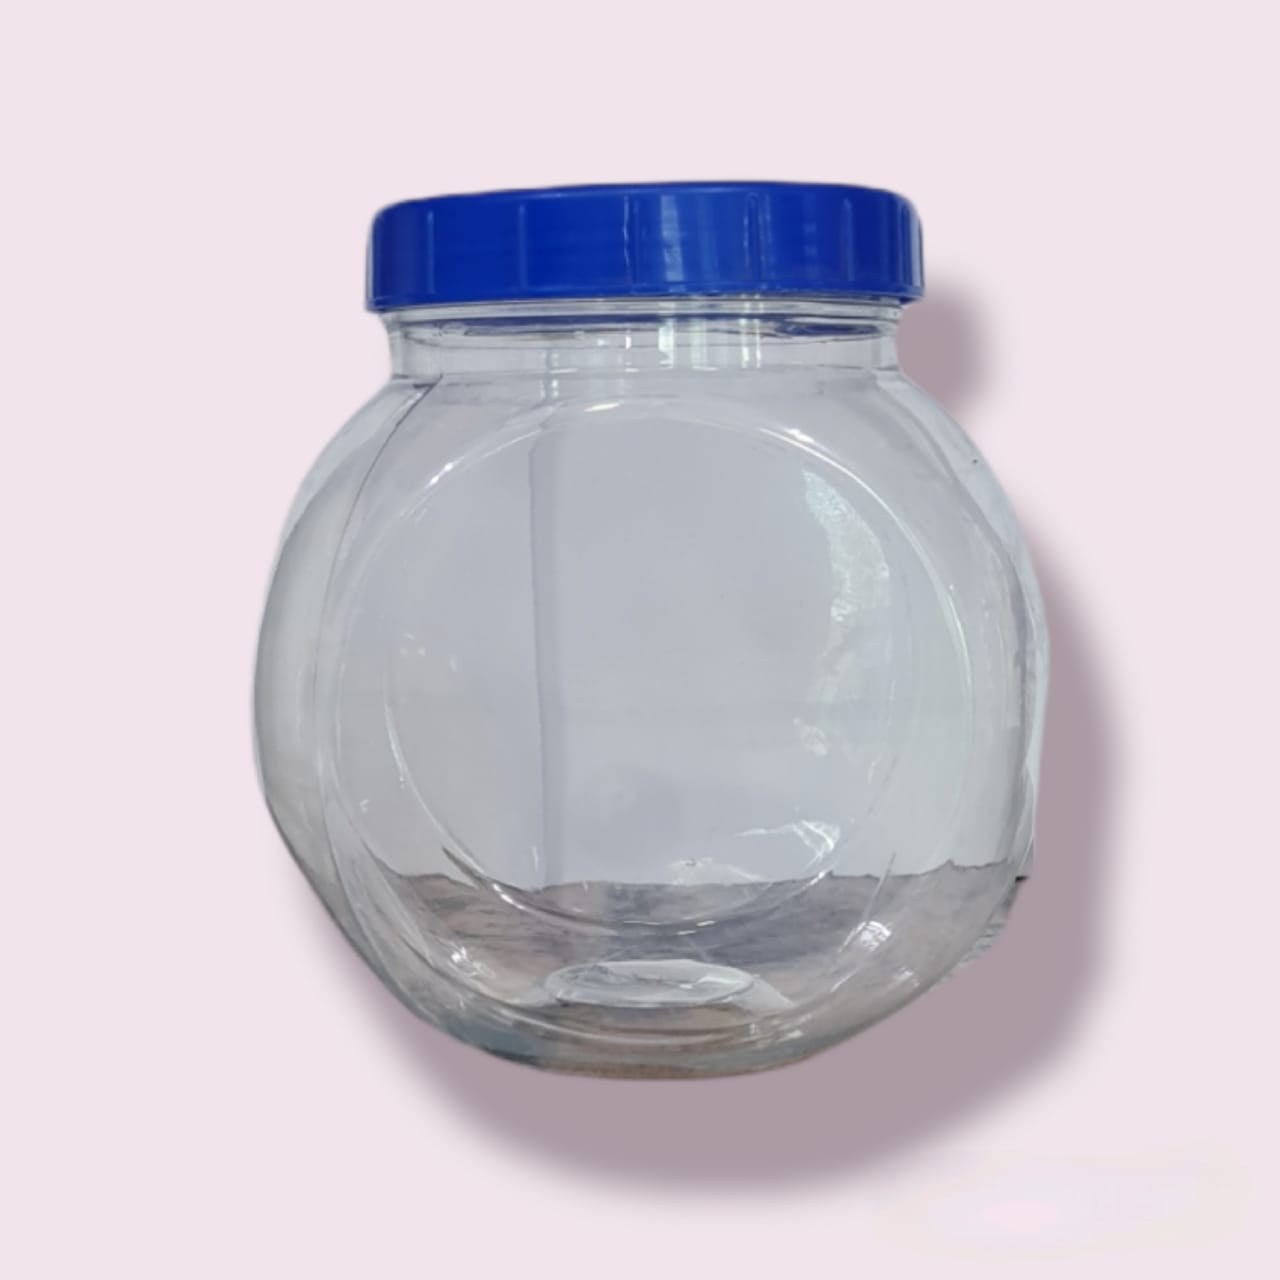 2kg Plastic Storage Jar Round Clear 2L